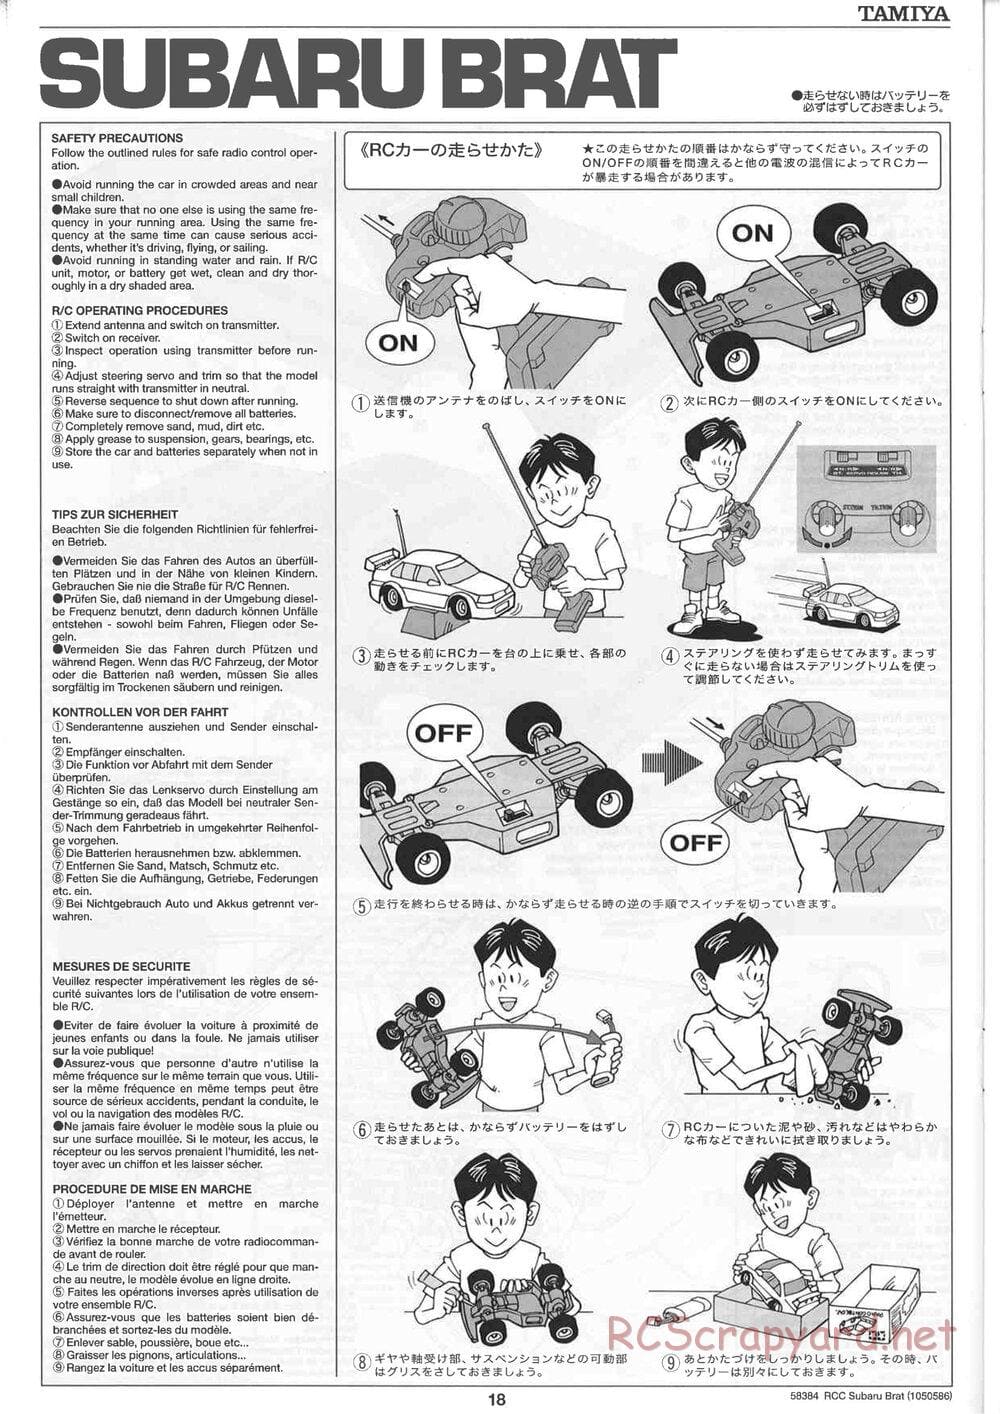 Tamiya - Subaru Brat 2007 - ORV Chassis - Manual - Page 18